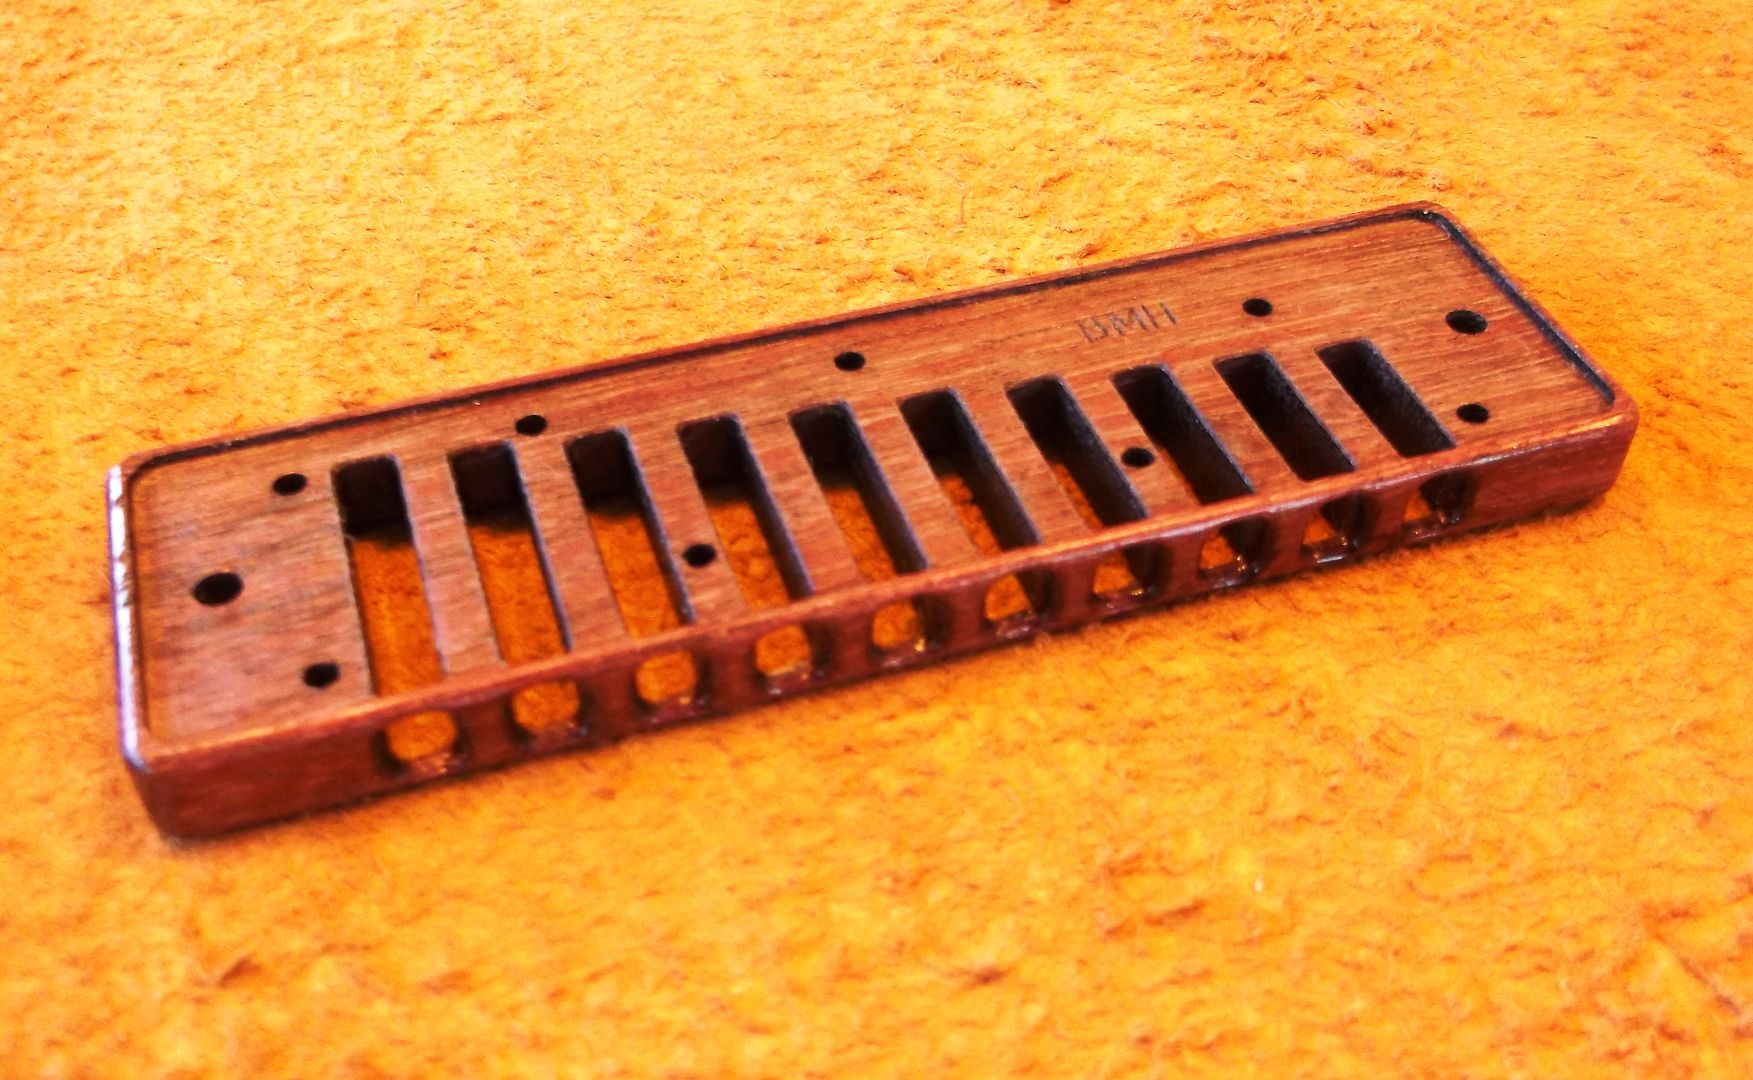 Milled Wood Combs for Sedel Session Steel photo DSCF4557_zps6kkvhxfb.jpg